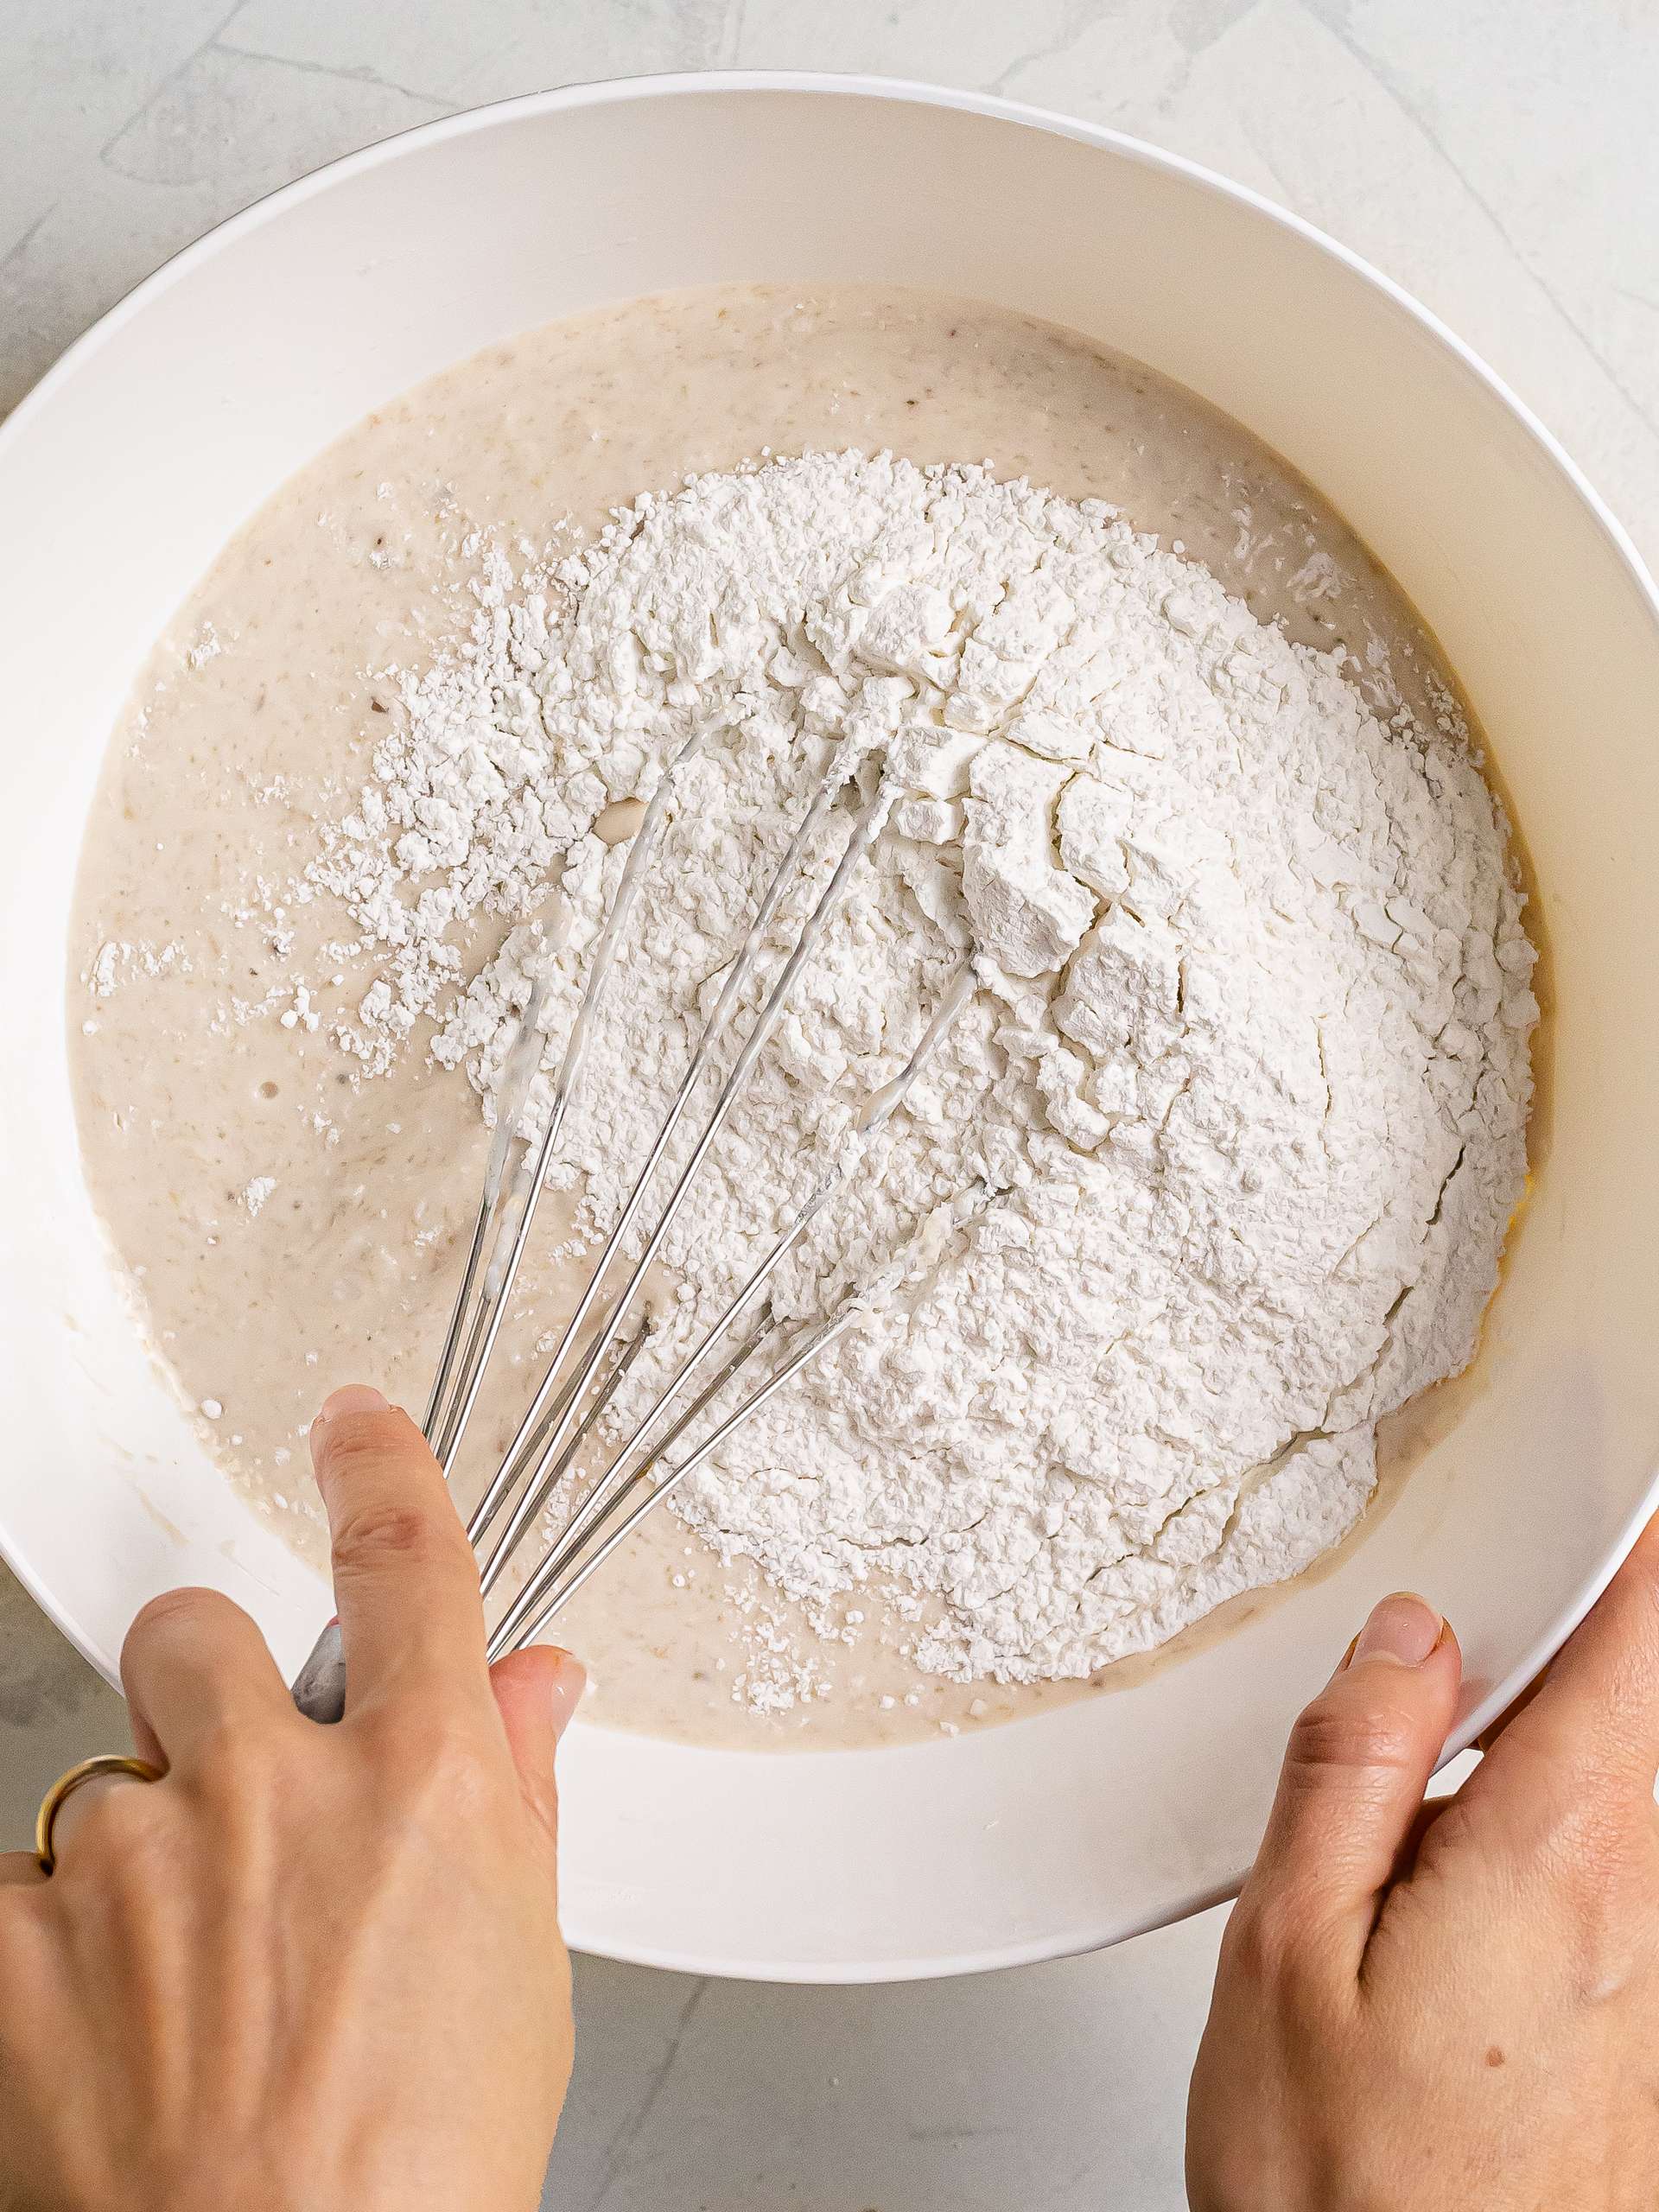 mochi rice flour mixed with banana batter for mochi banana bread cake